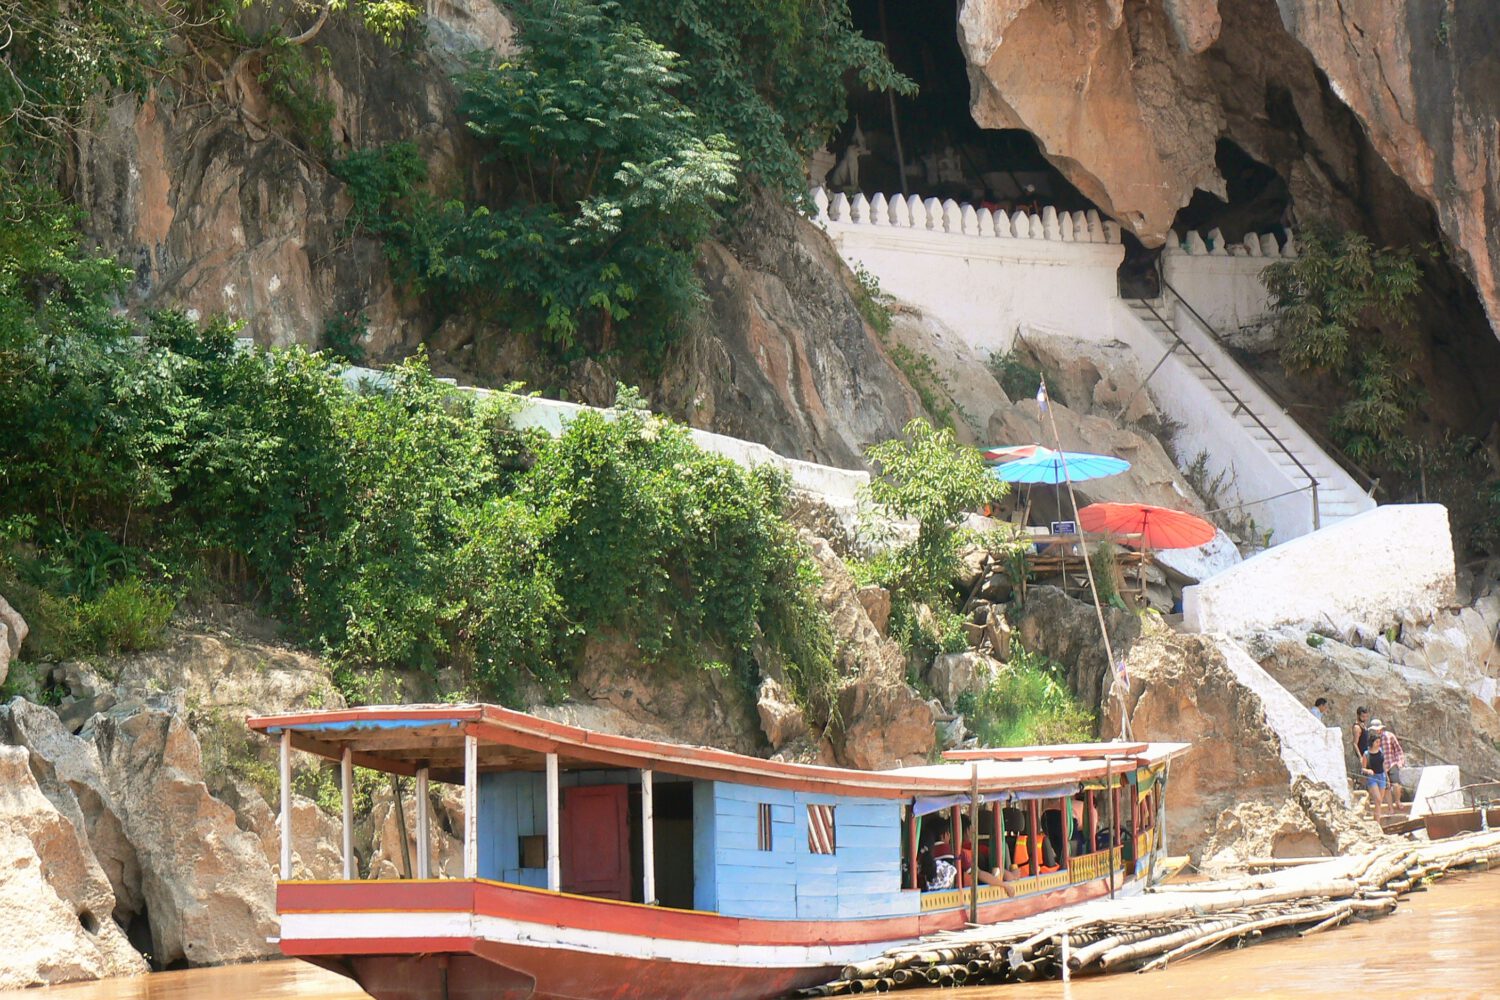 Mekong river cruise in Laos